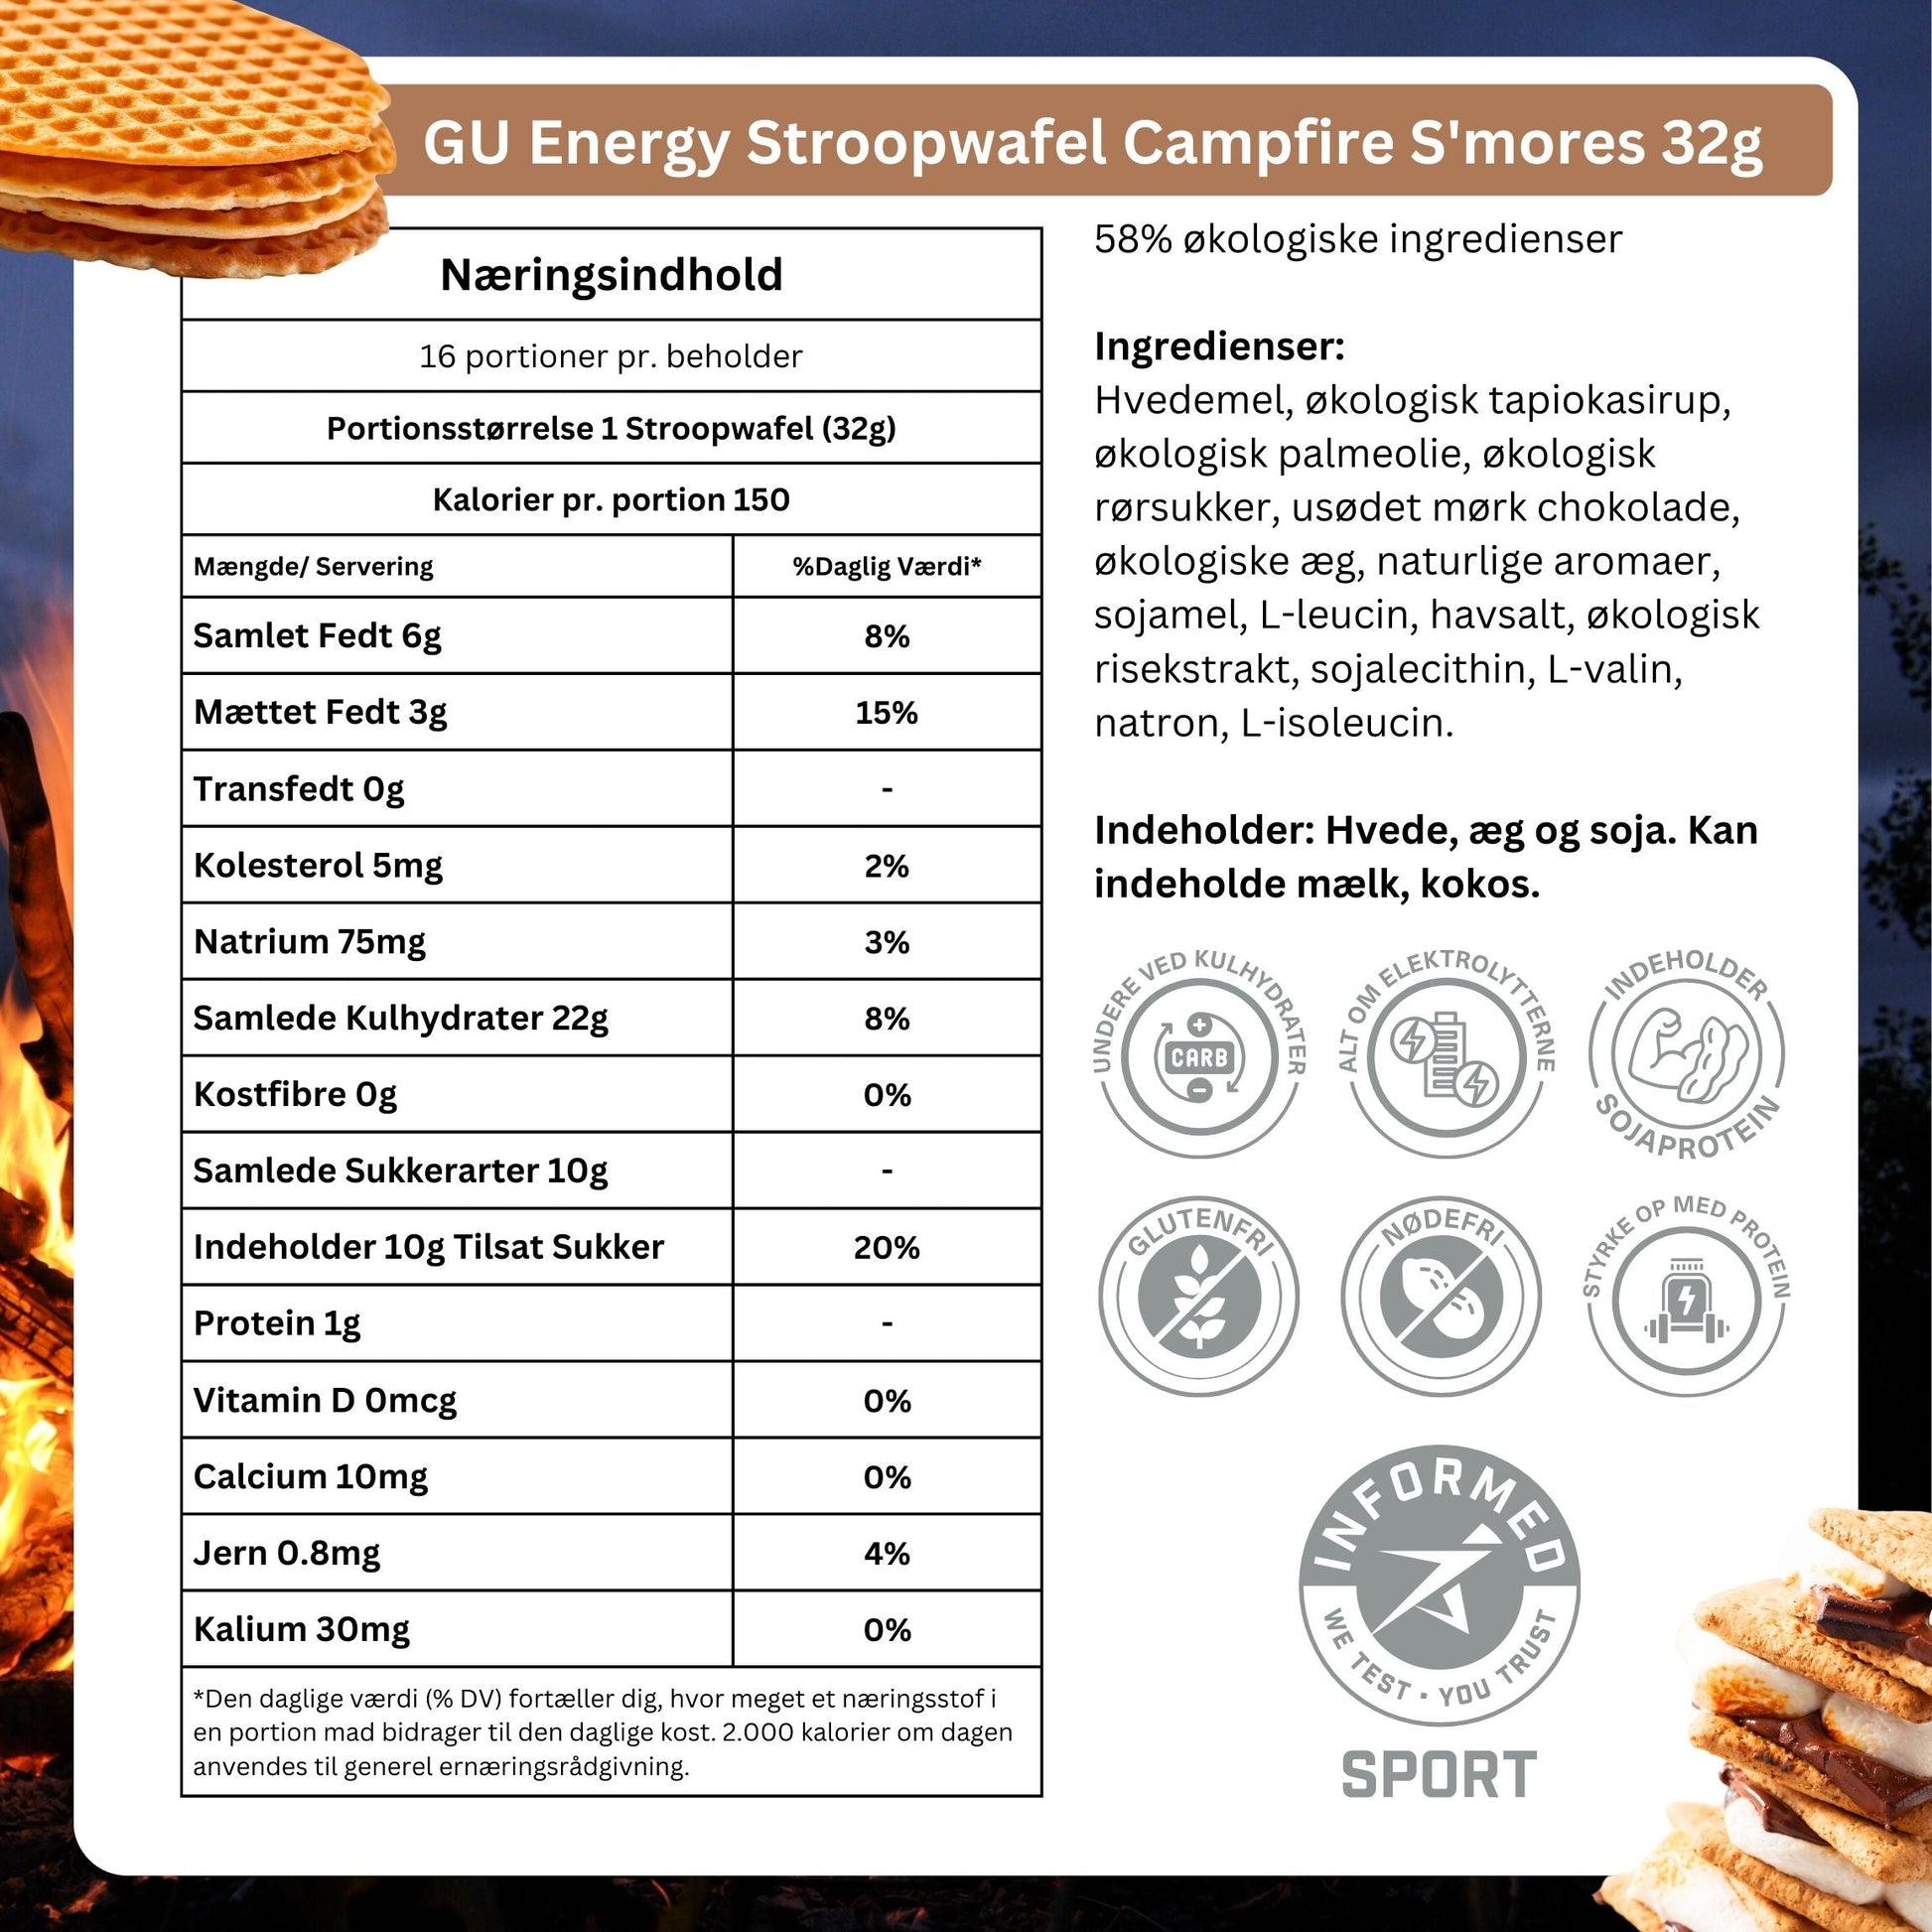 GU Energy Stroopwafel Campfire S'mores 32g - Danish Ingredients